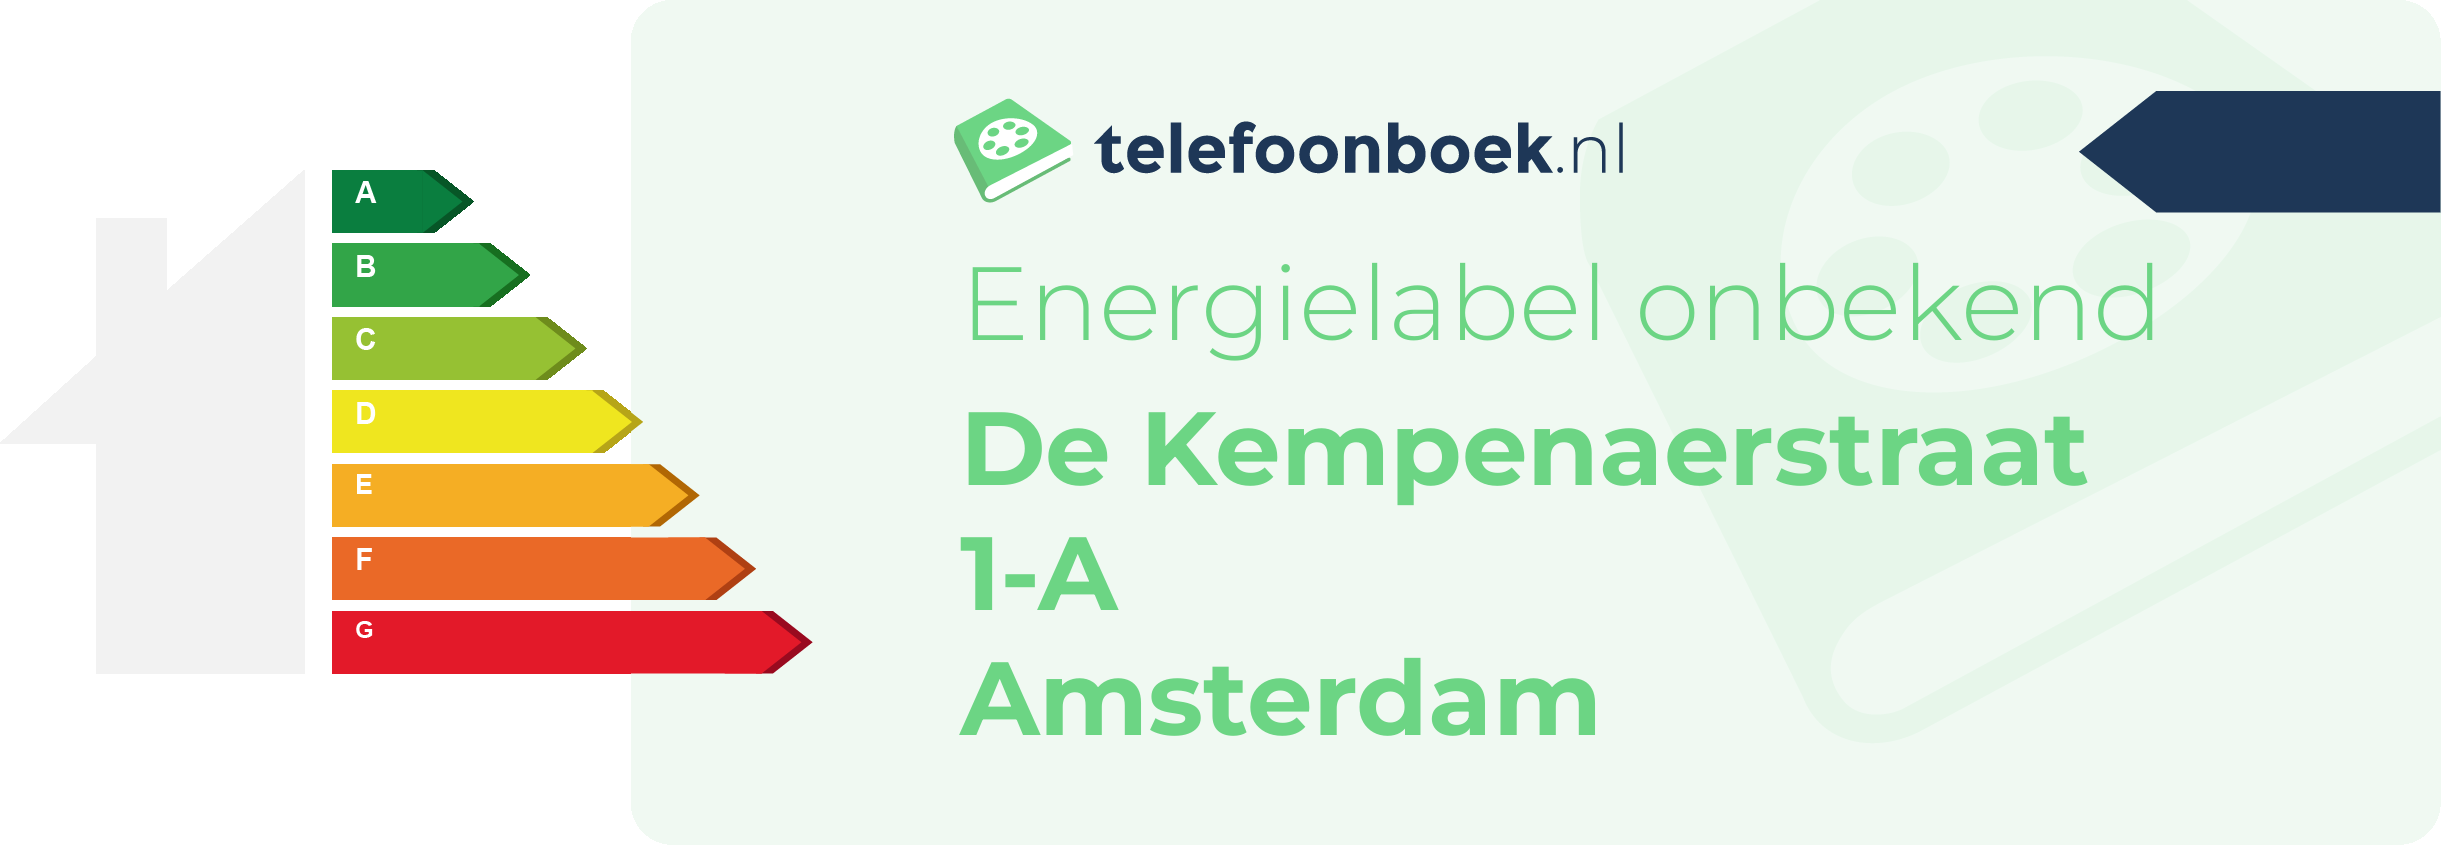 Energielabel De Kempenaerstraat 1-A Amsterdam